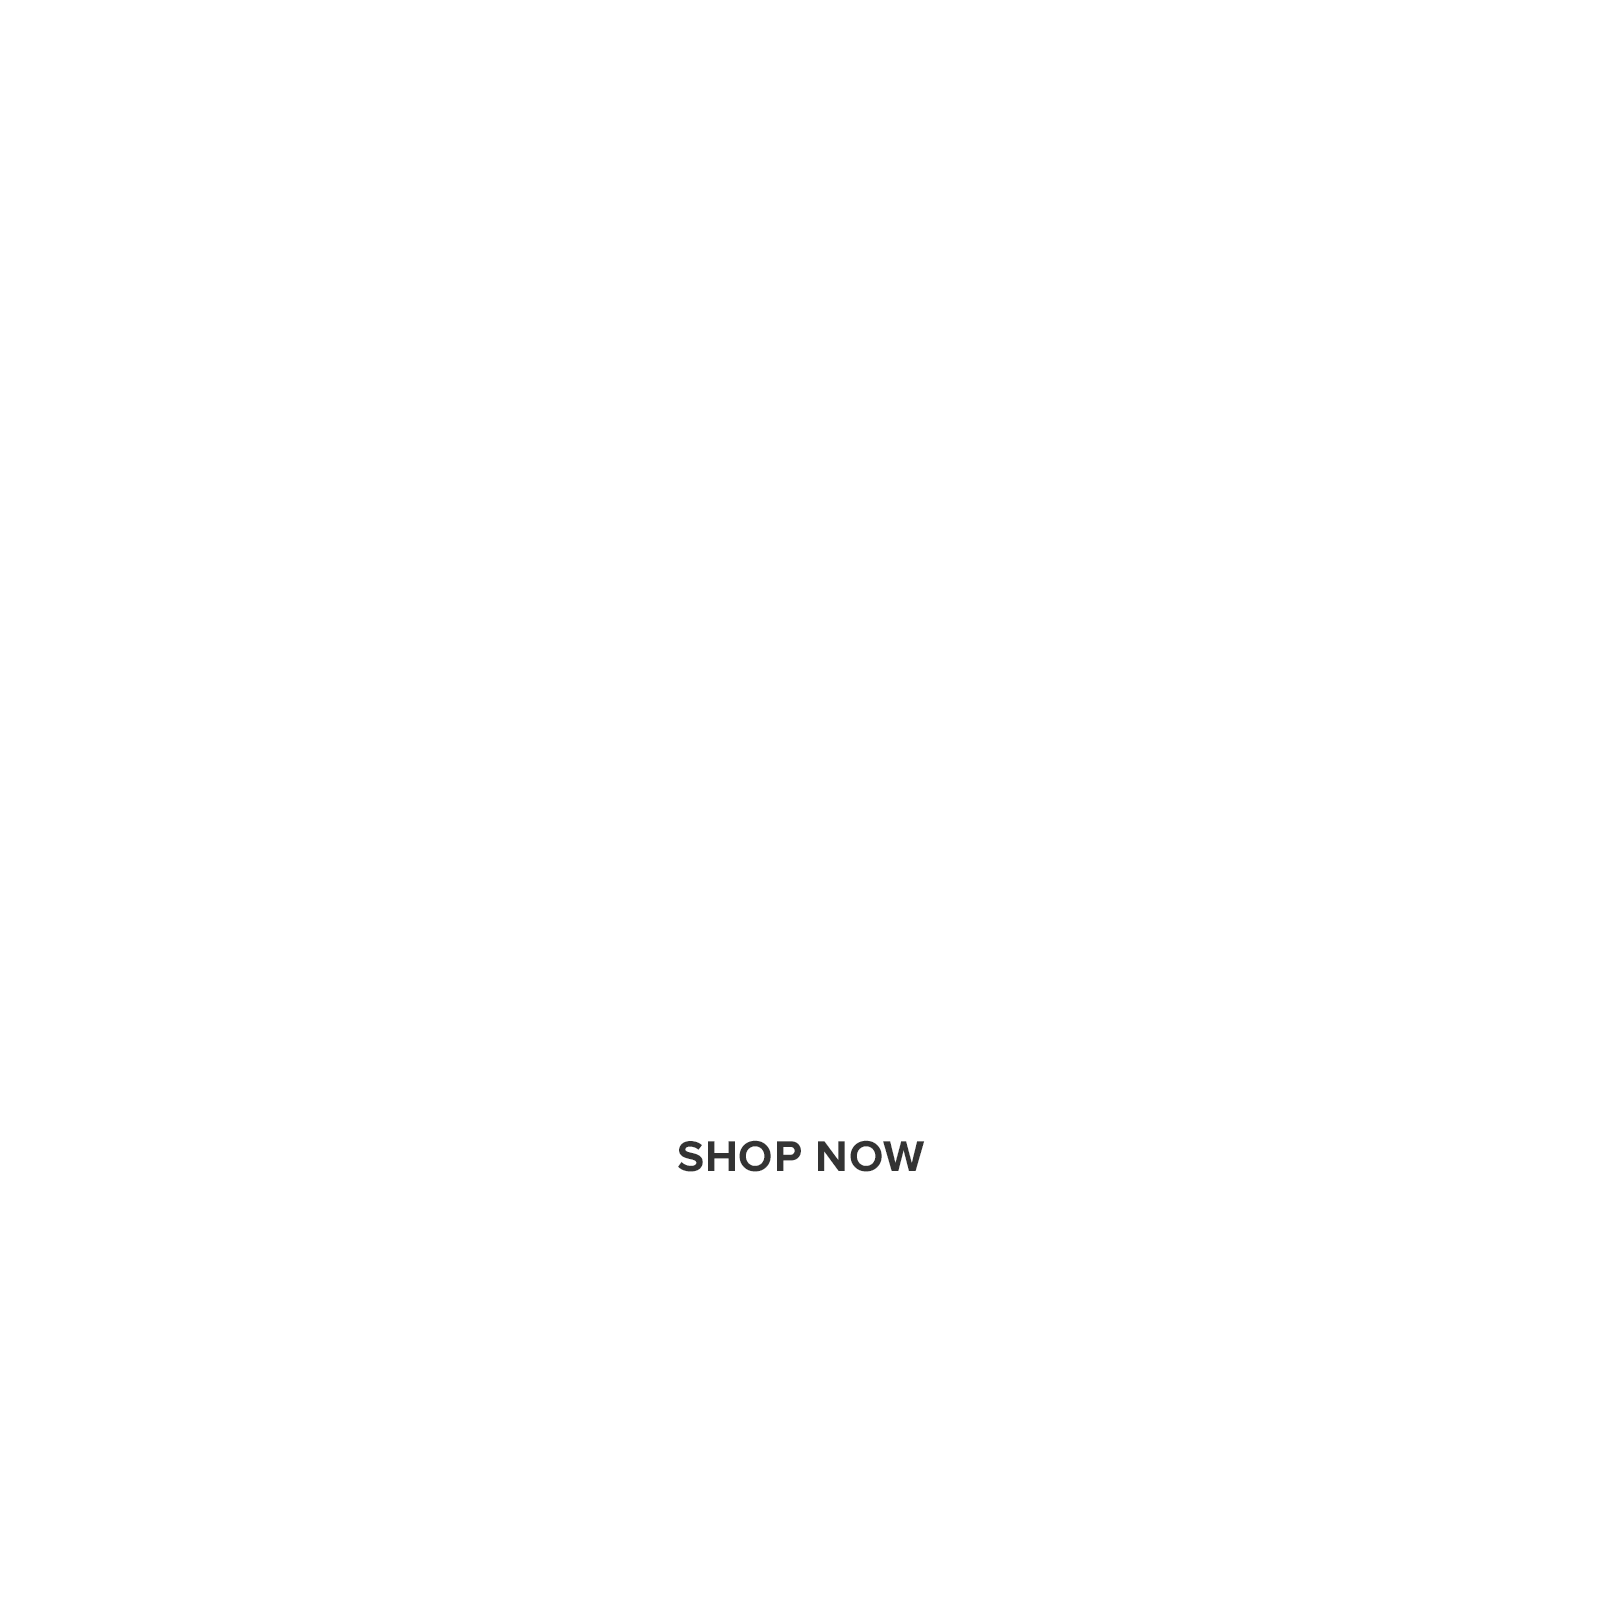 25% off active balance with code dotdsitting